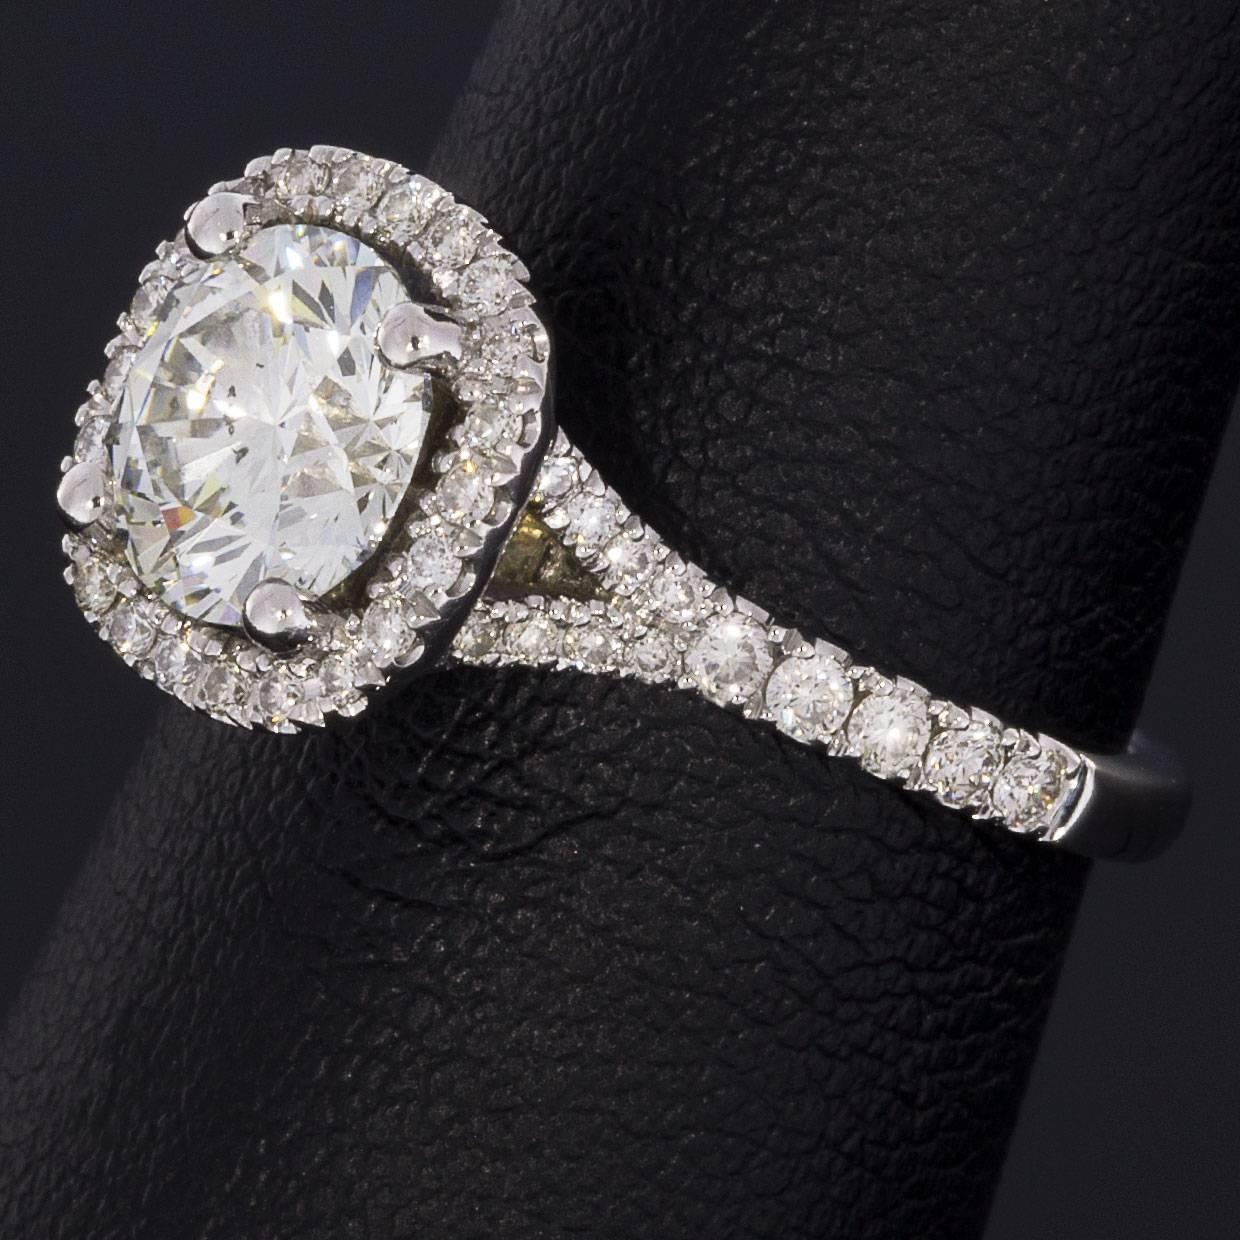 Women's White Gold 1.94 Carat Round Diamond Engagement Ring